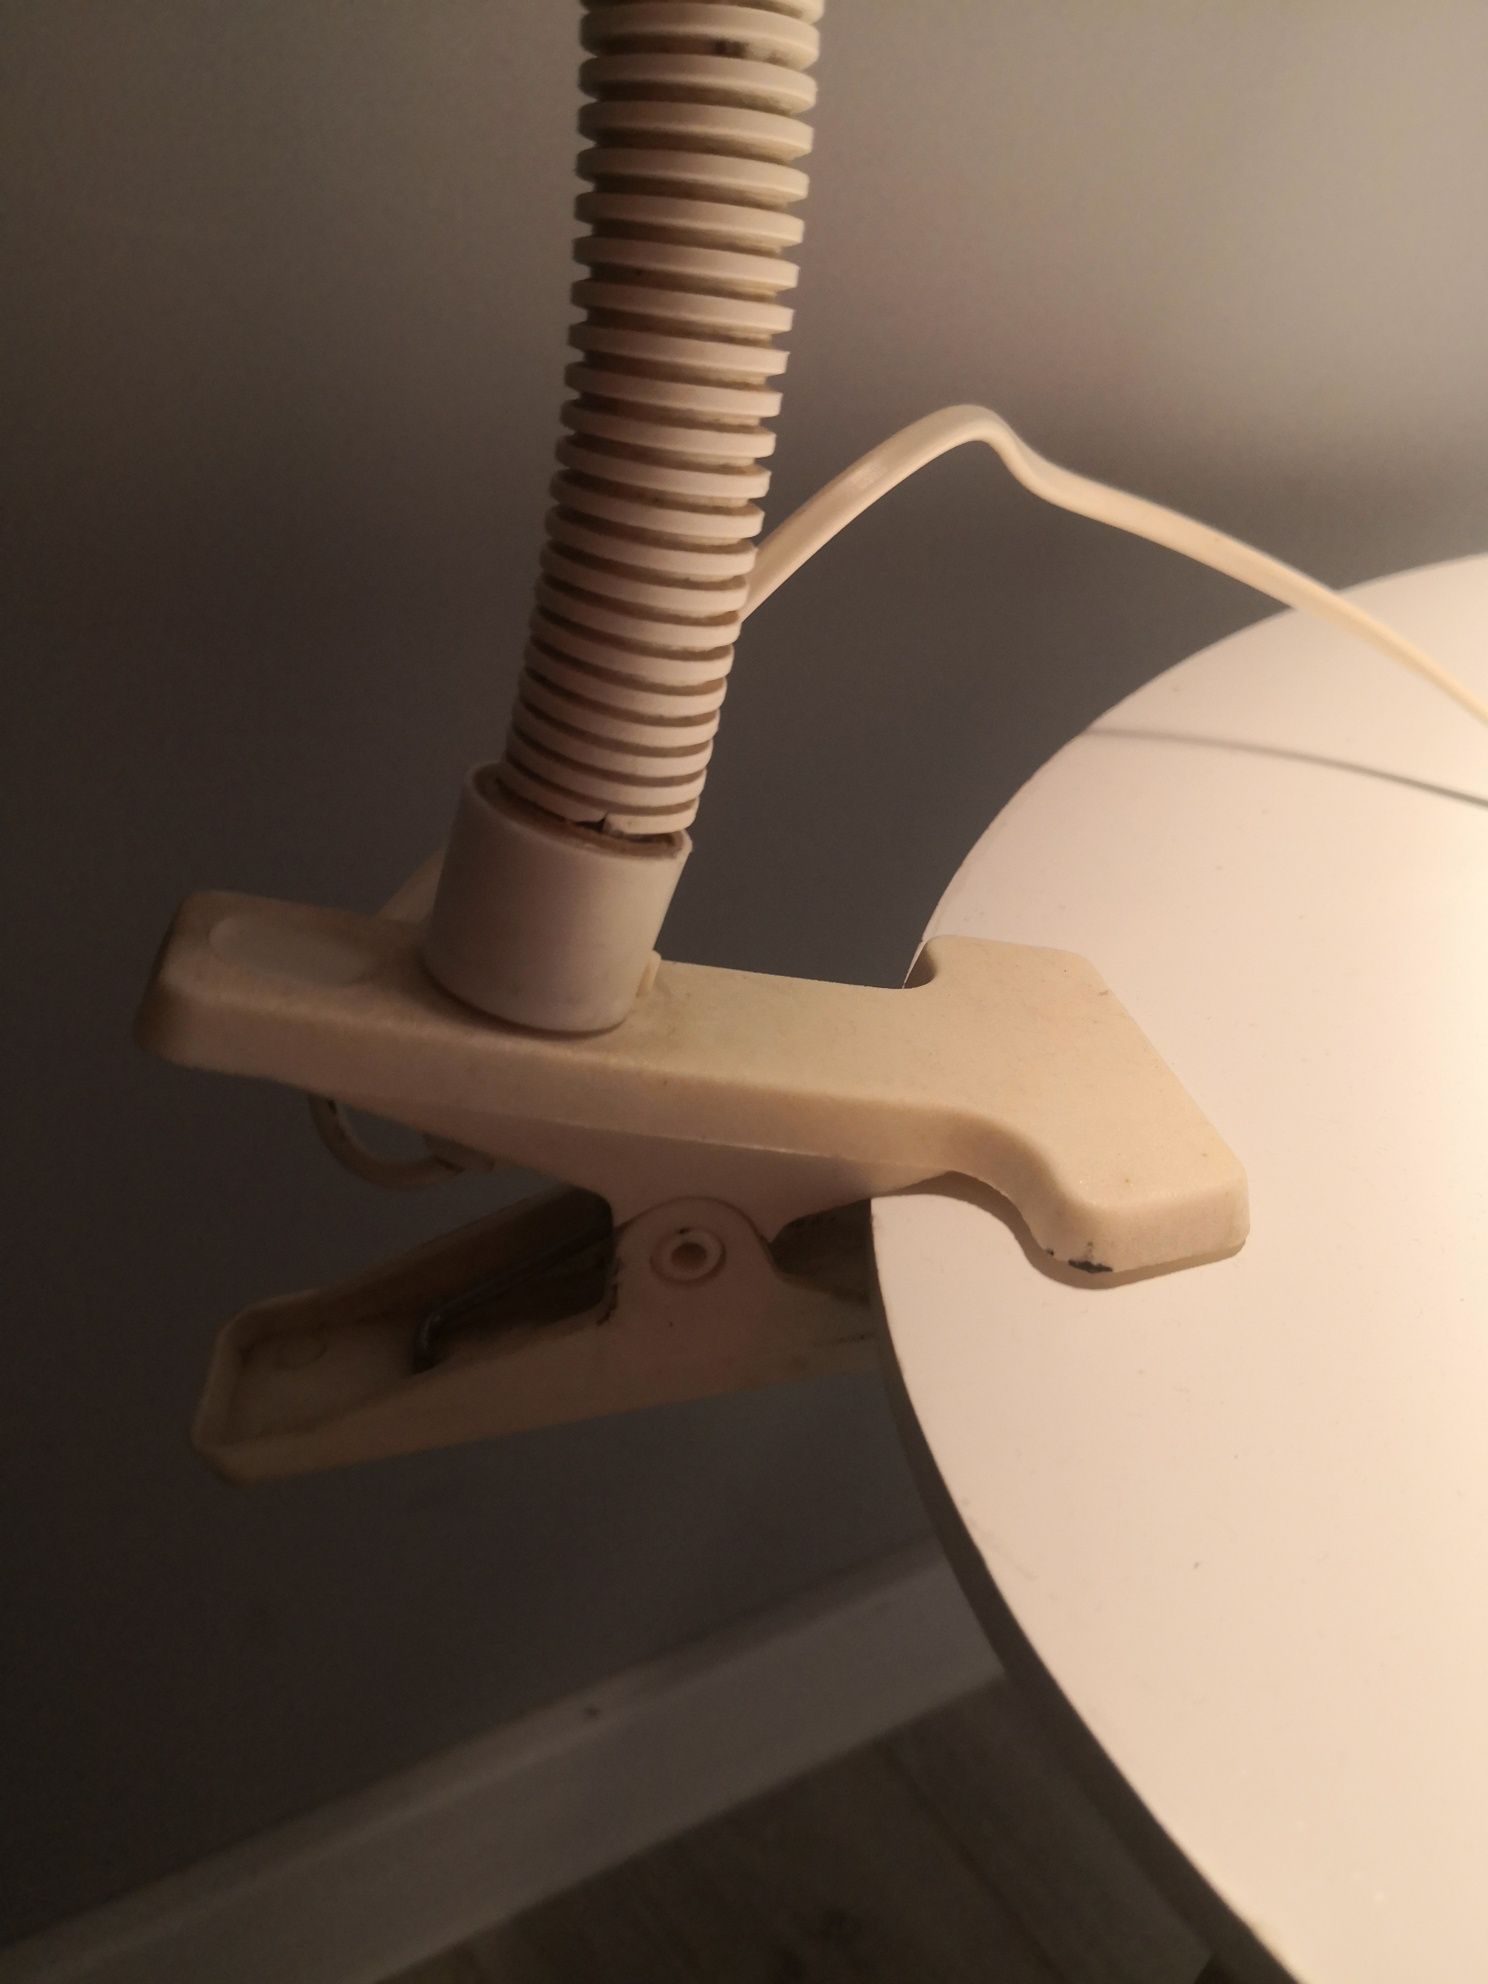 Stara giętka  regulowana  lampka  biurkowa z Prlu Vinted